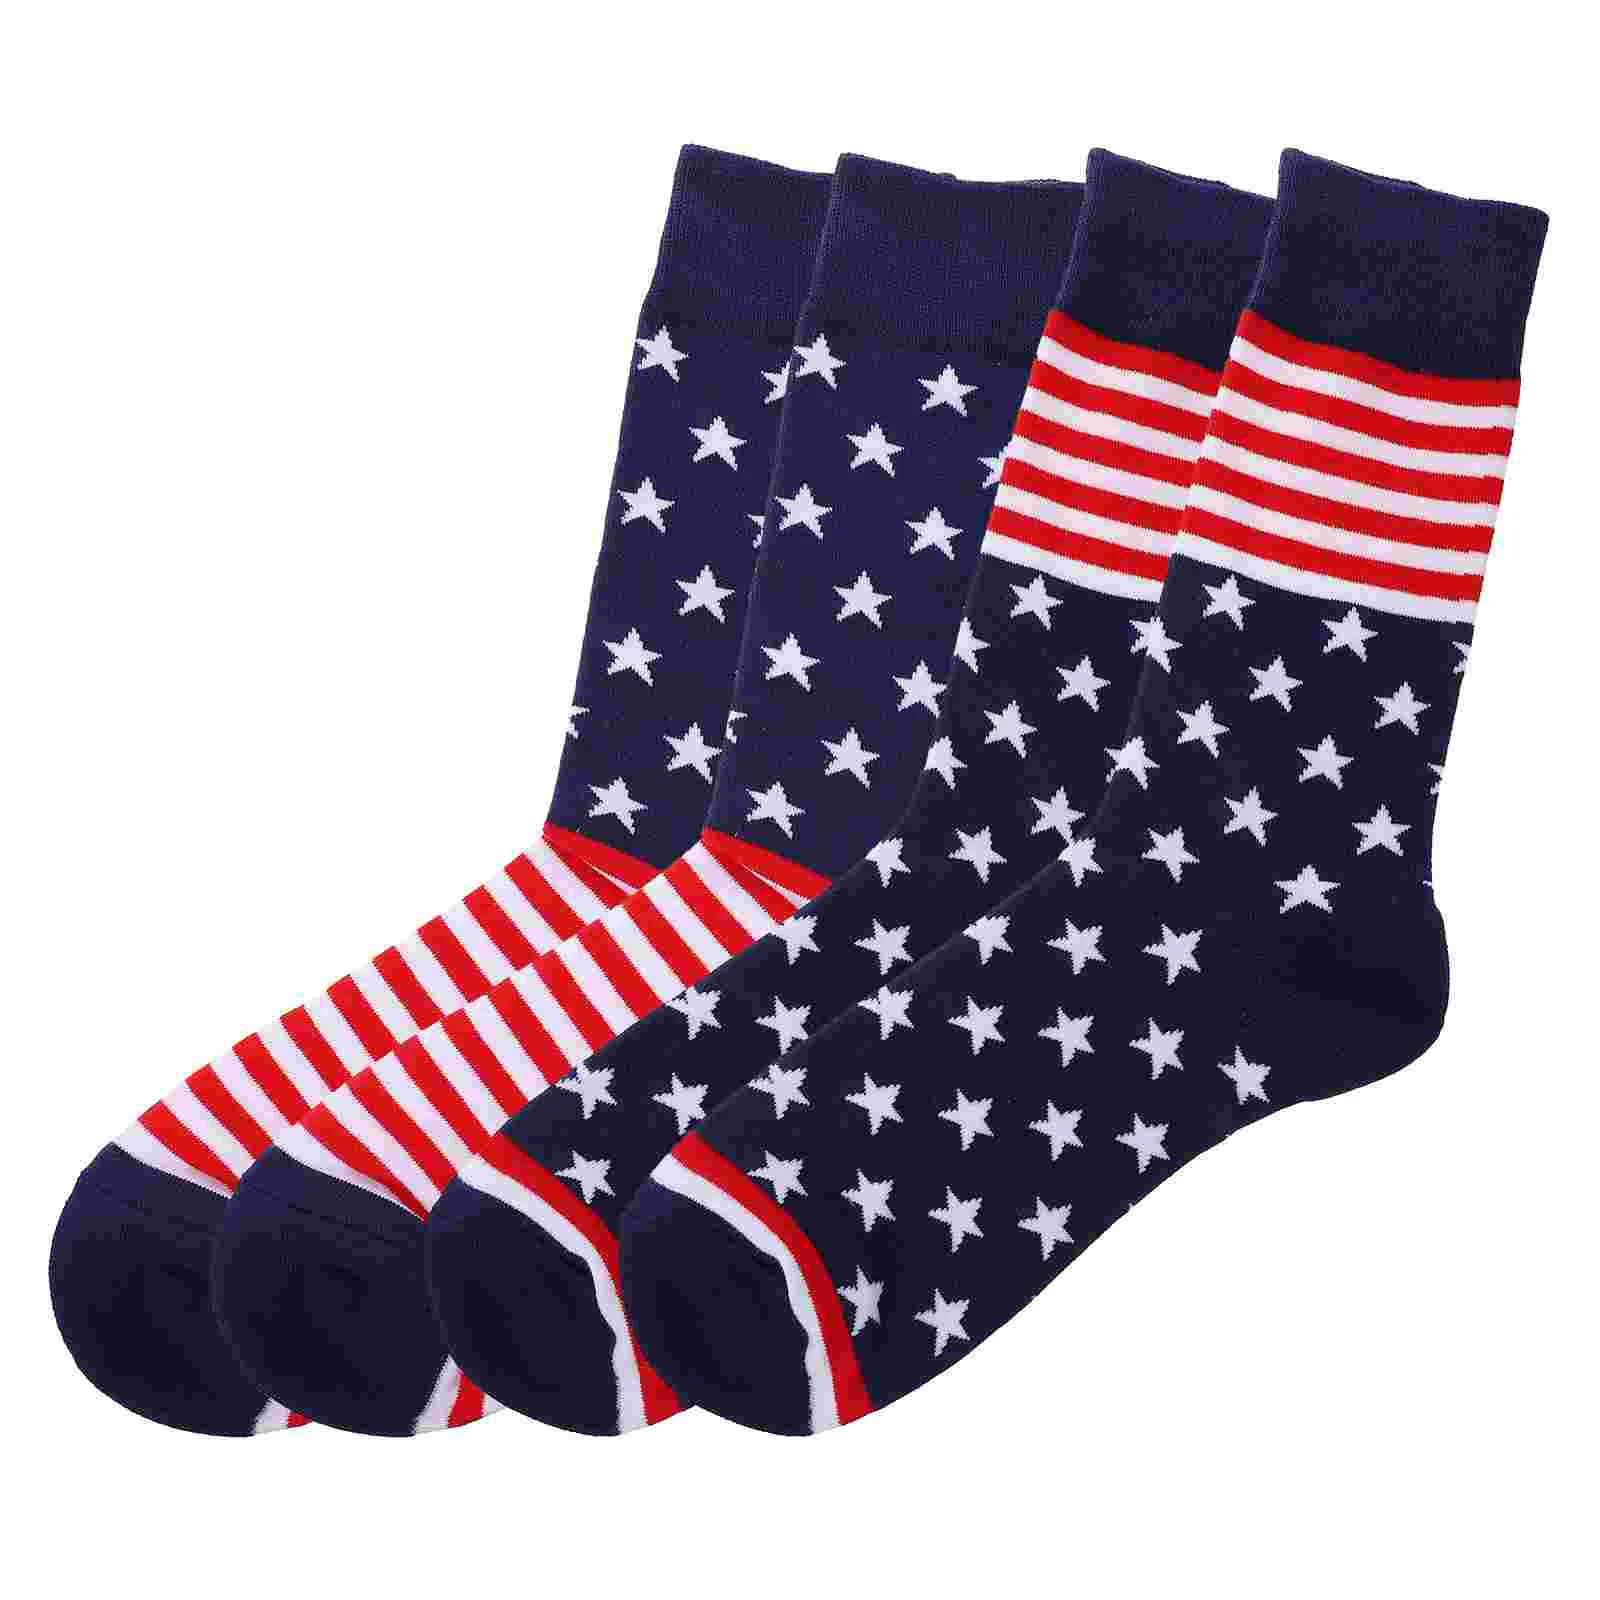 

2 Pairs Men's Socks United States Flag Tube Cotton Stockings Universal Fashion Man